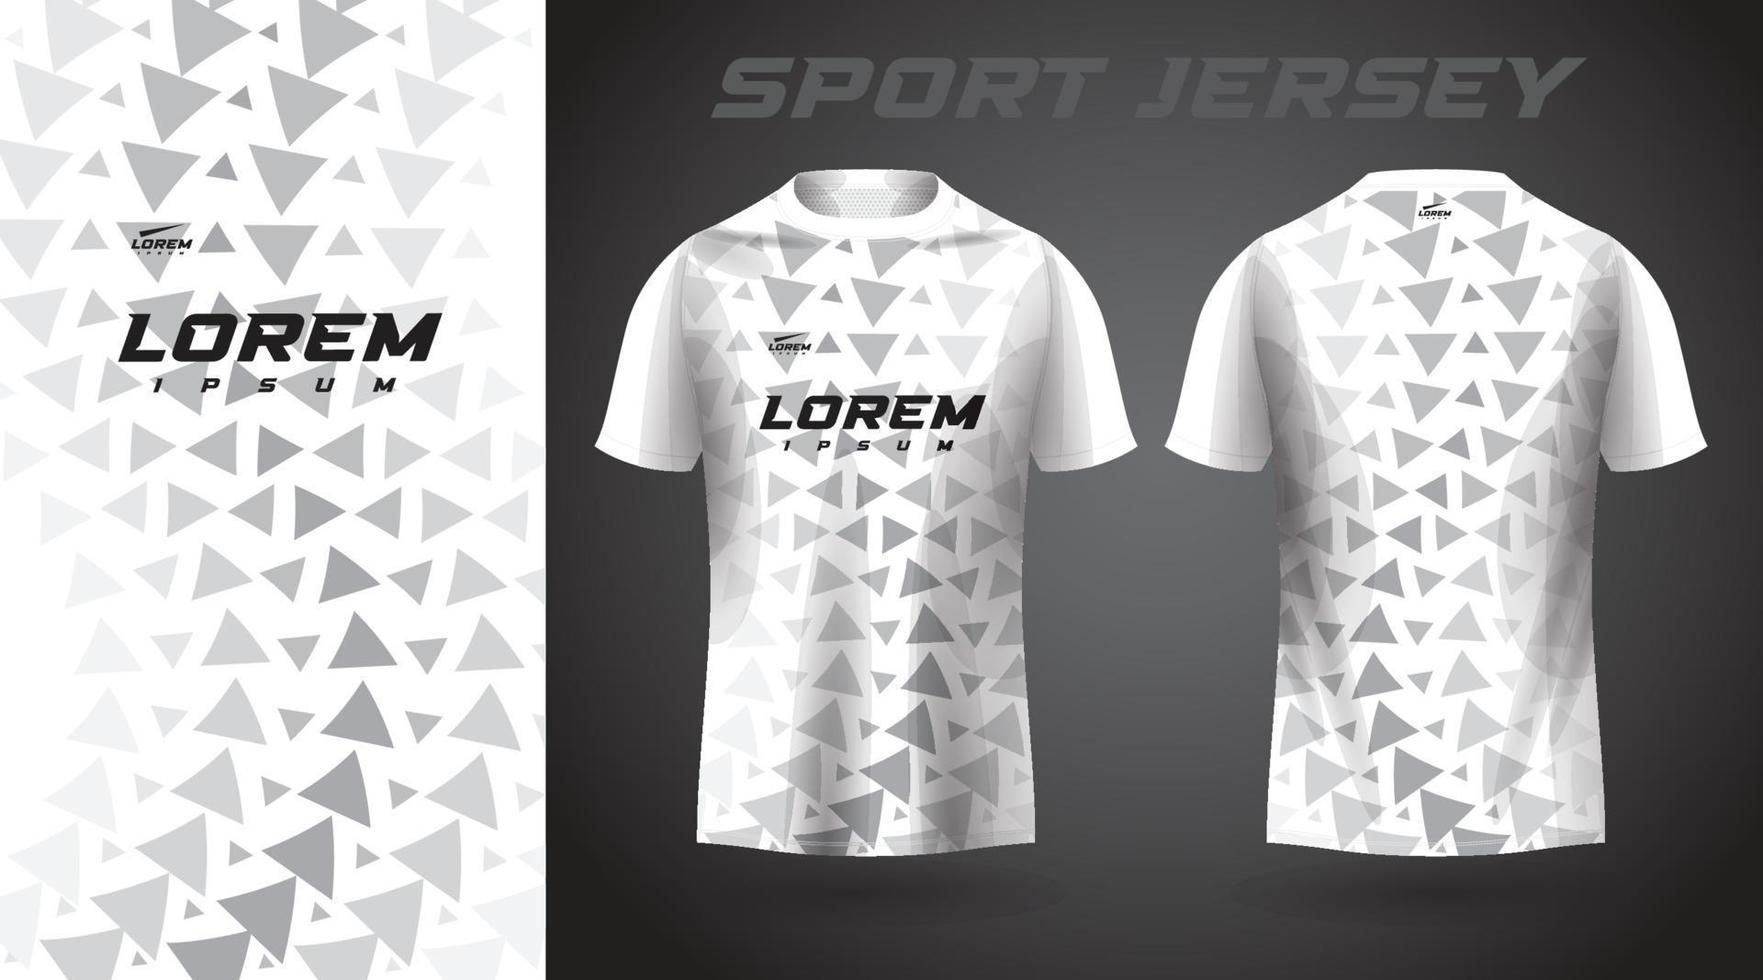 t-shirt bianca con design in jersey sportivo vettore